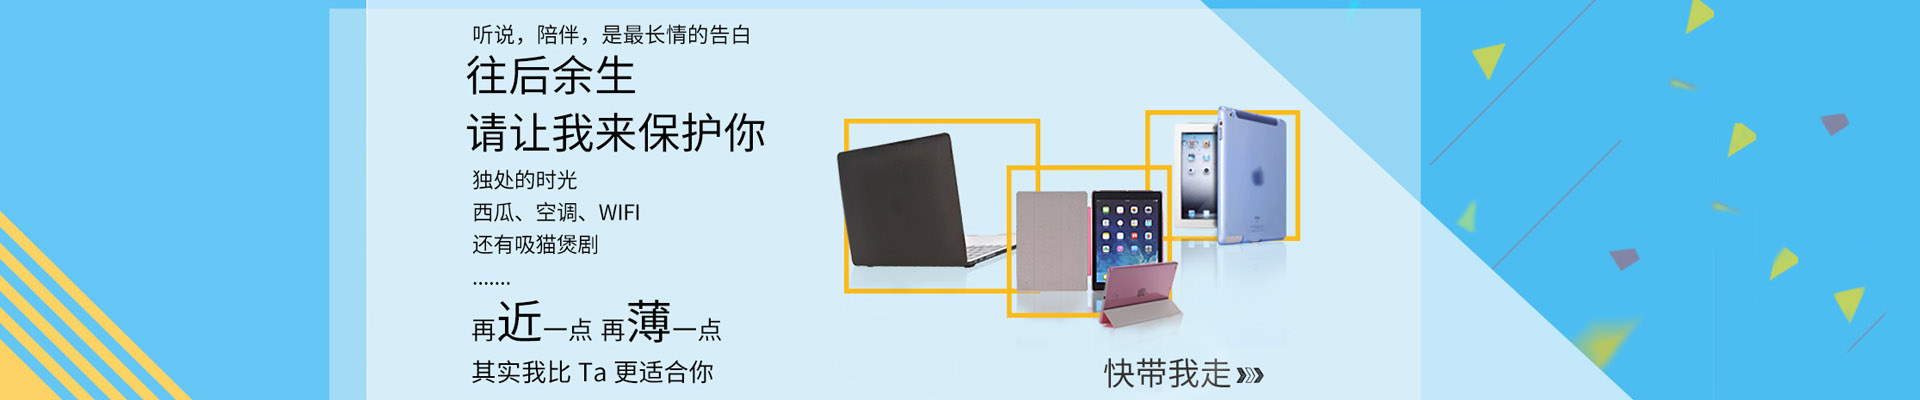 iPadmini2完美保护壳-PC款-东莞市成康电子有限公司